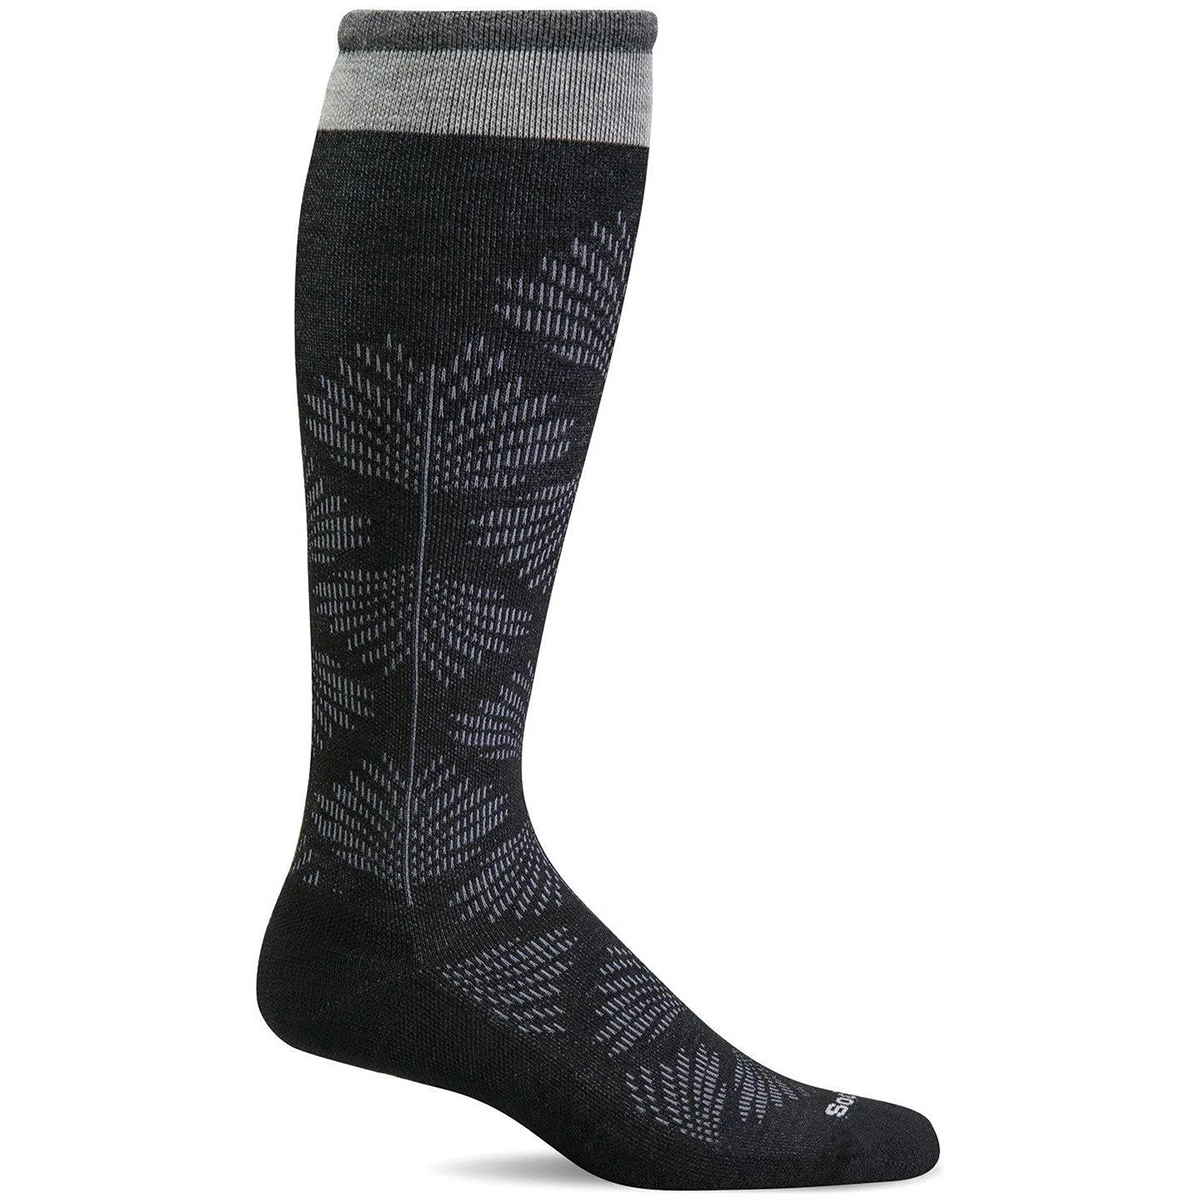 Sockwell Women's Floral Compression Socks